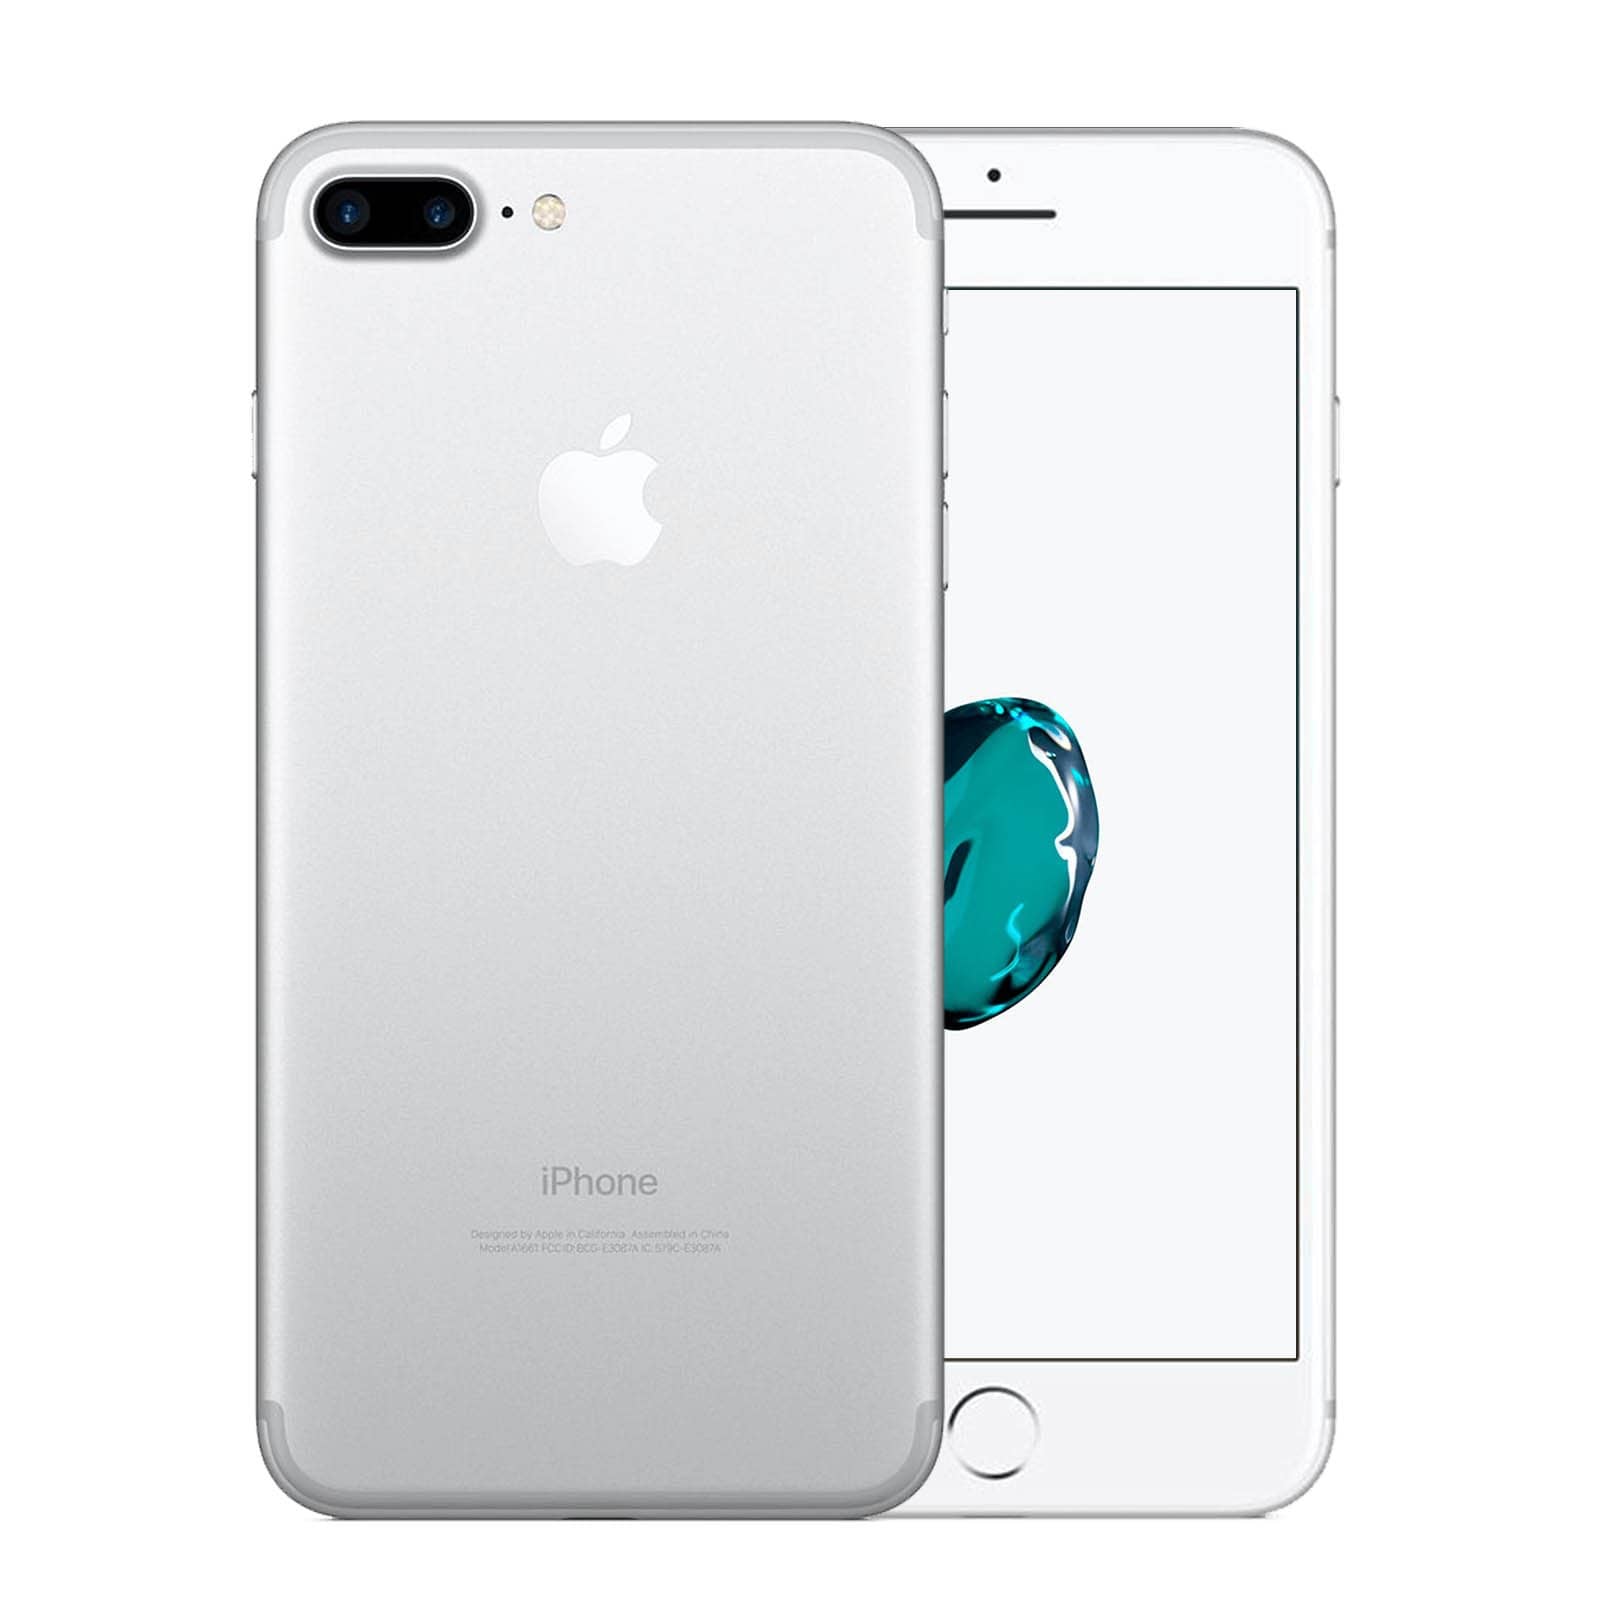 Apple iPhone 7 Plus 128GB Silver Very Good - Unlocked 128GB Silver Very Good